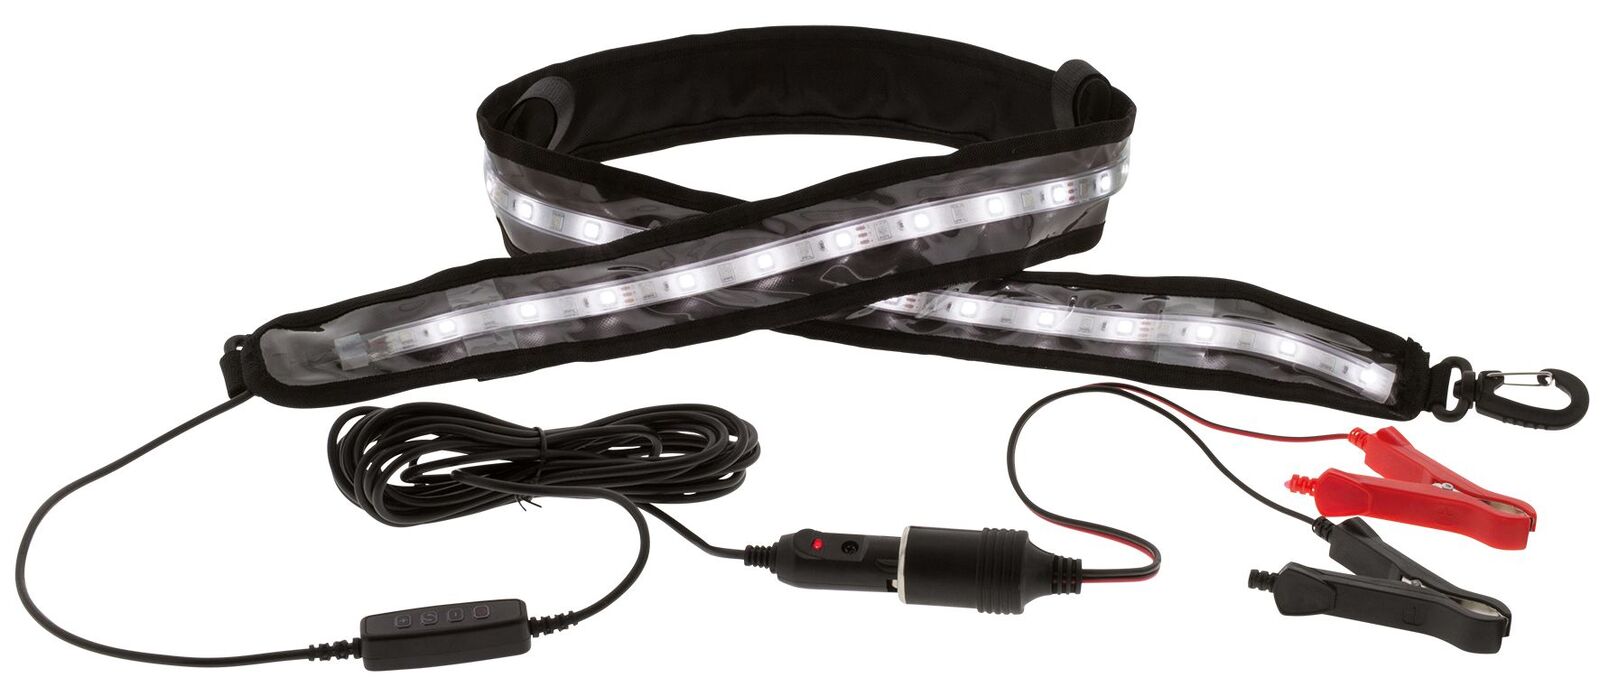 Flexible LED Camping Strip Lamp - Dual Orange/White Illumination